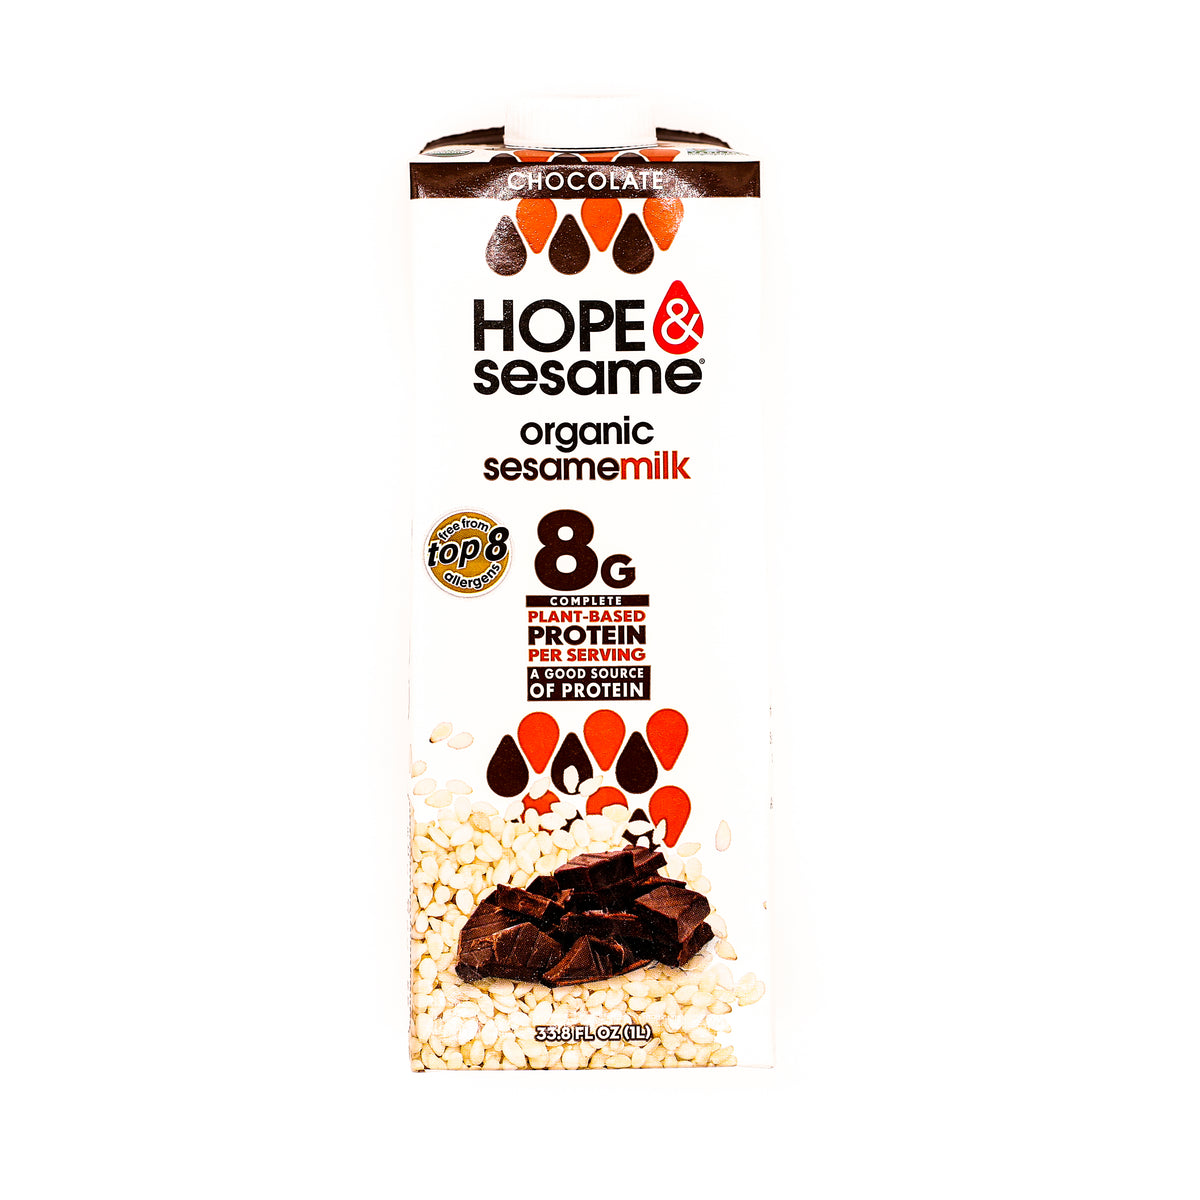 HOPE &amp; sesame Milk Sesamemilk Chocolate